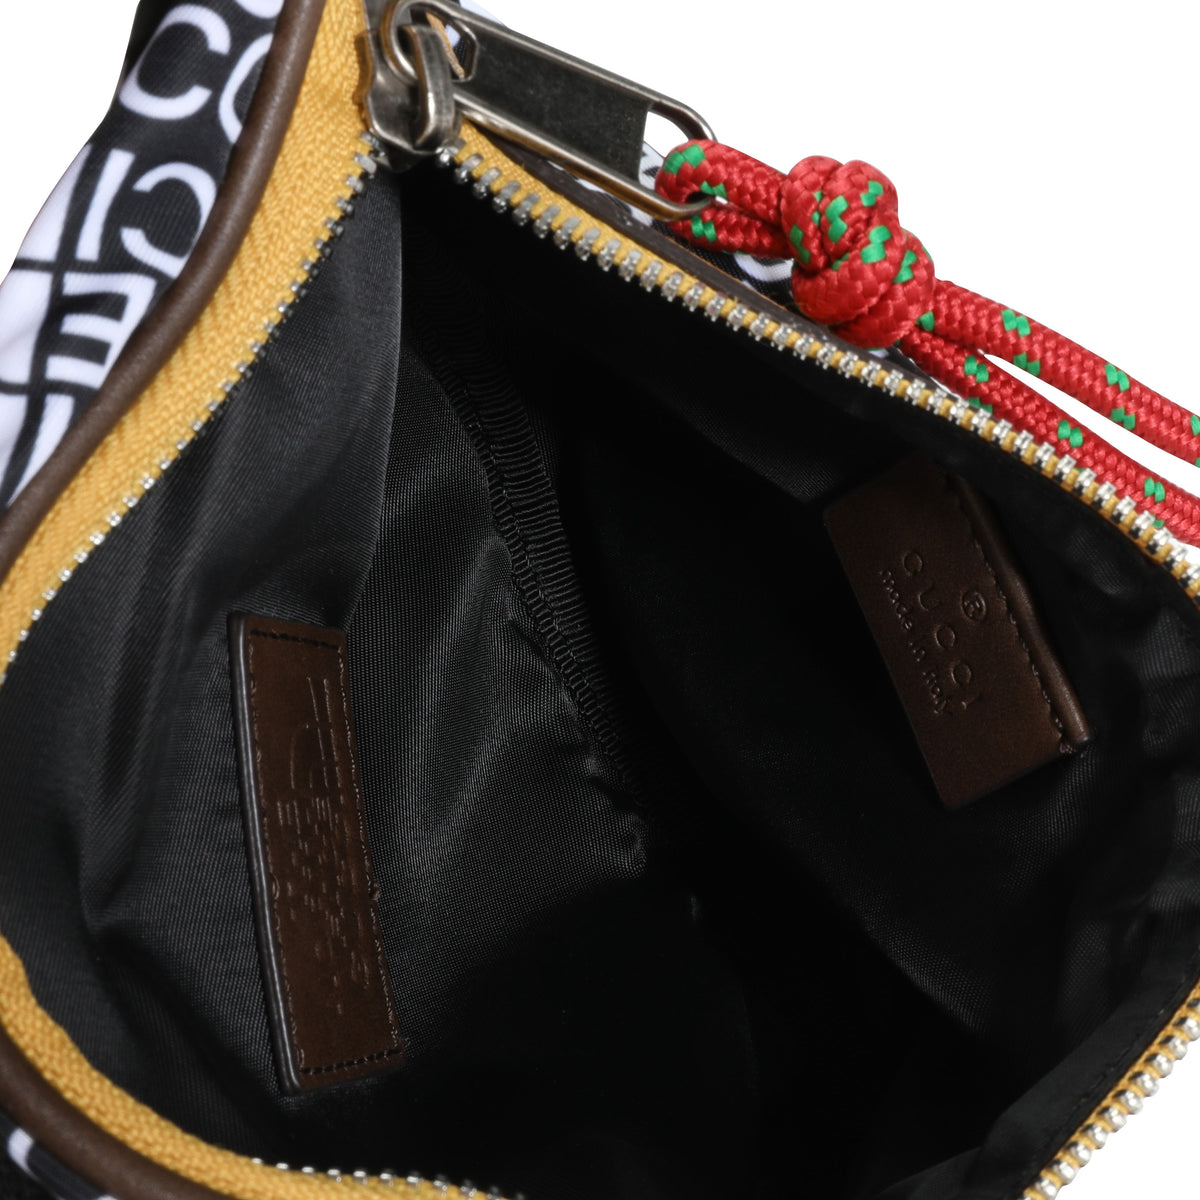 Gucci x The North Face Black & White Nylon Belt Bag